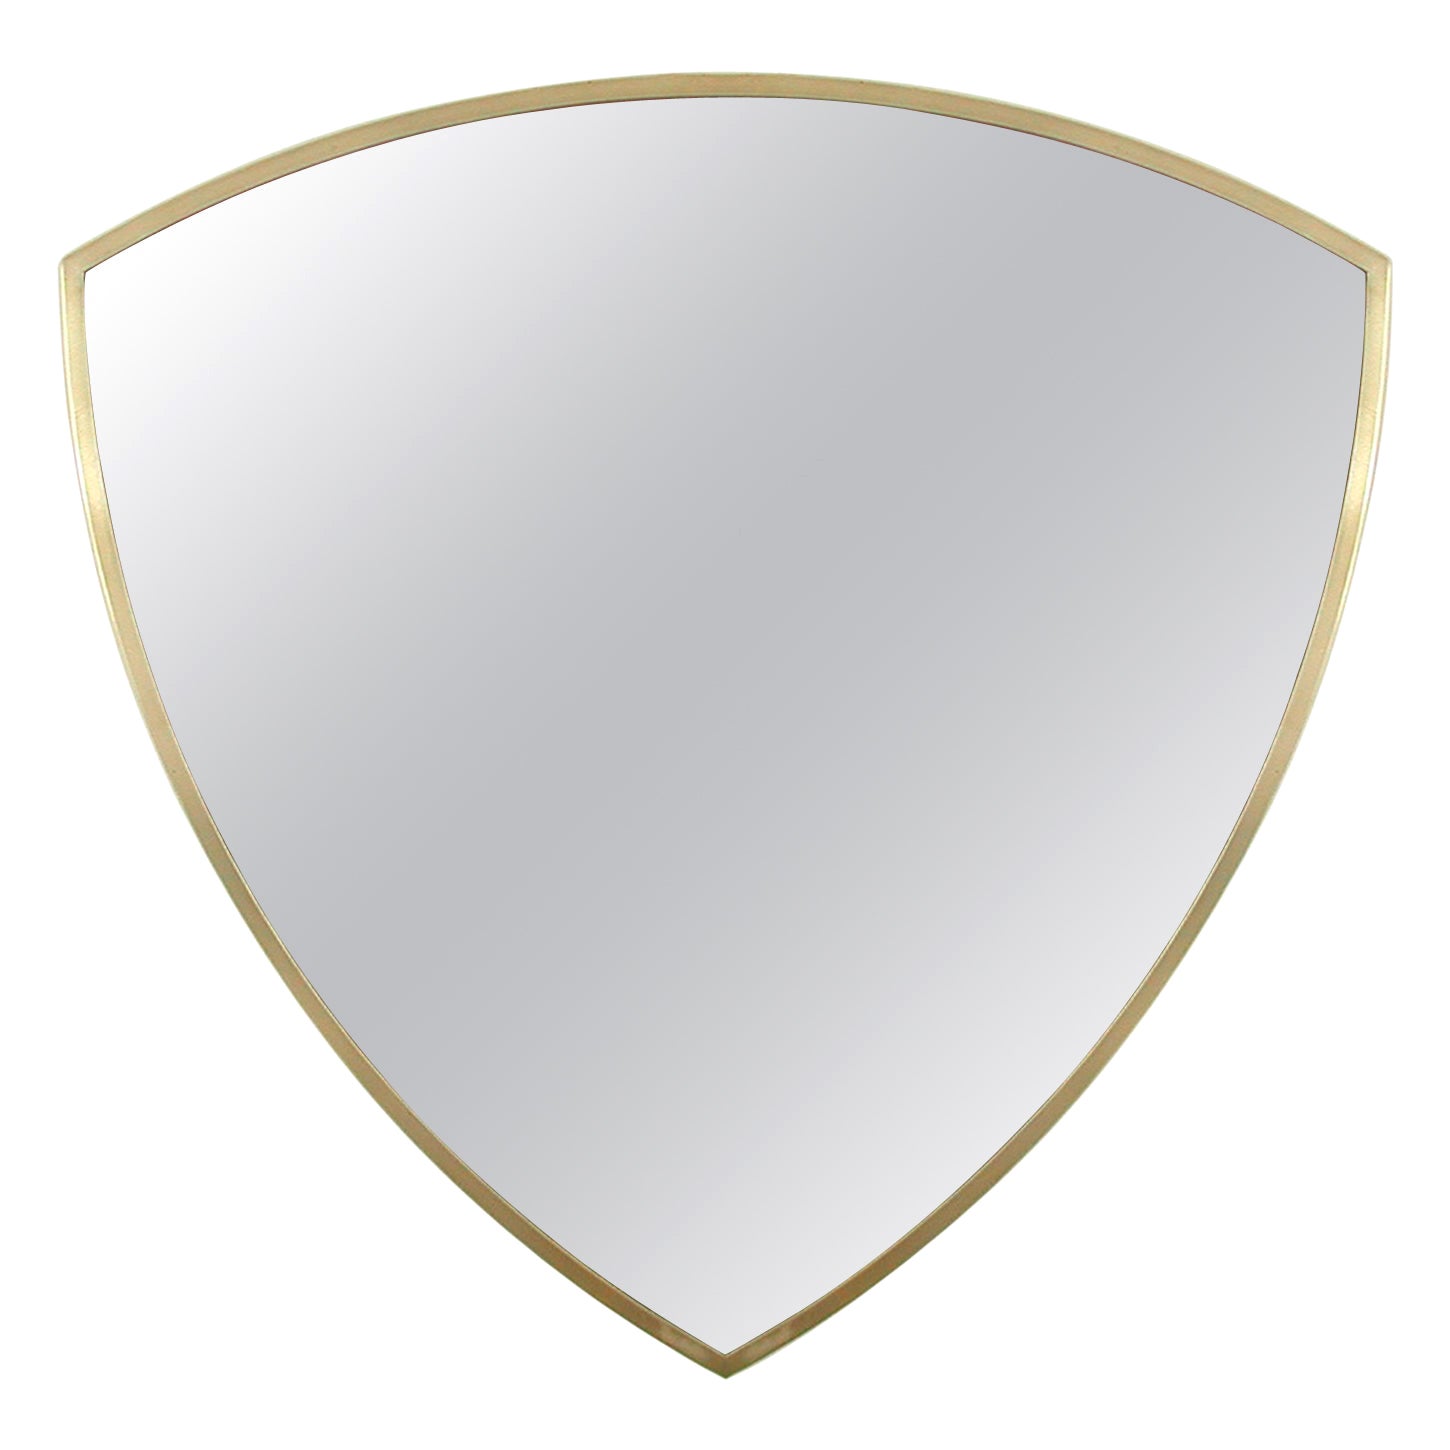 Midcentury Brass Shield Shaped Wall Mirror, Gio Ponti Style, Italy 1950s